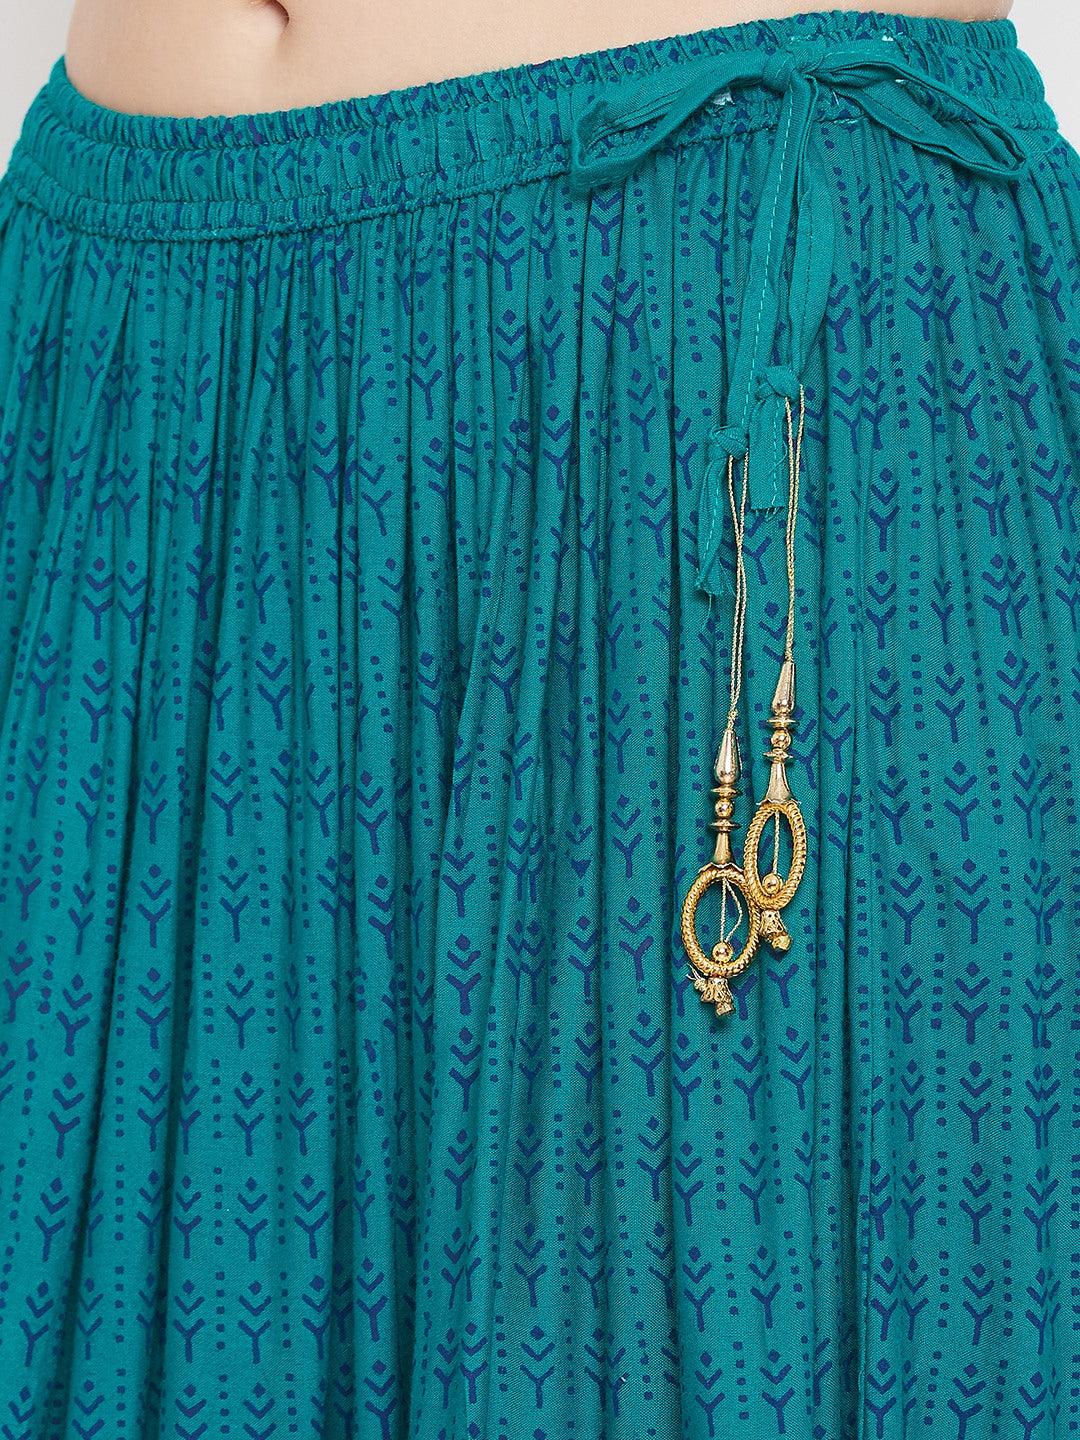 Clora Turquoise Printed Rayon Skirt